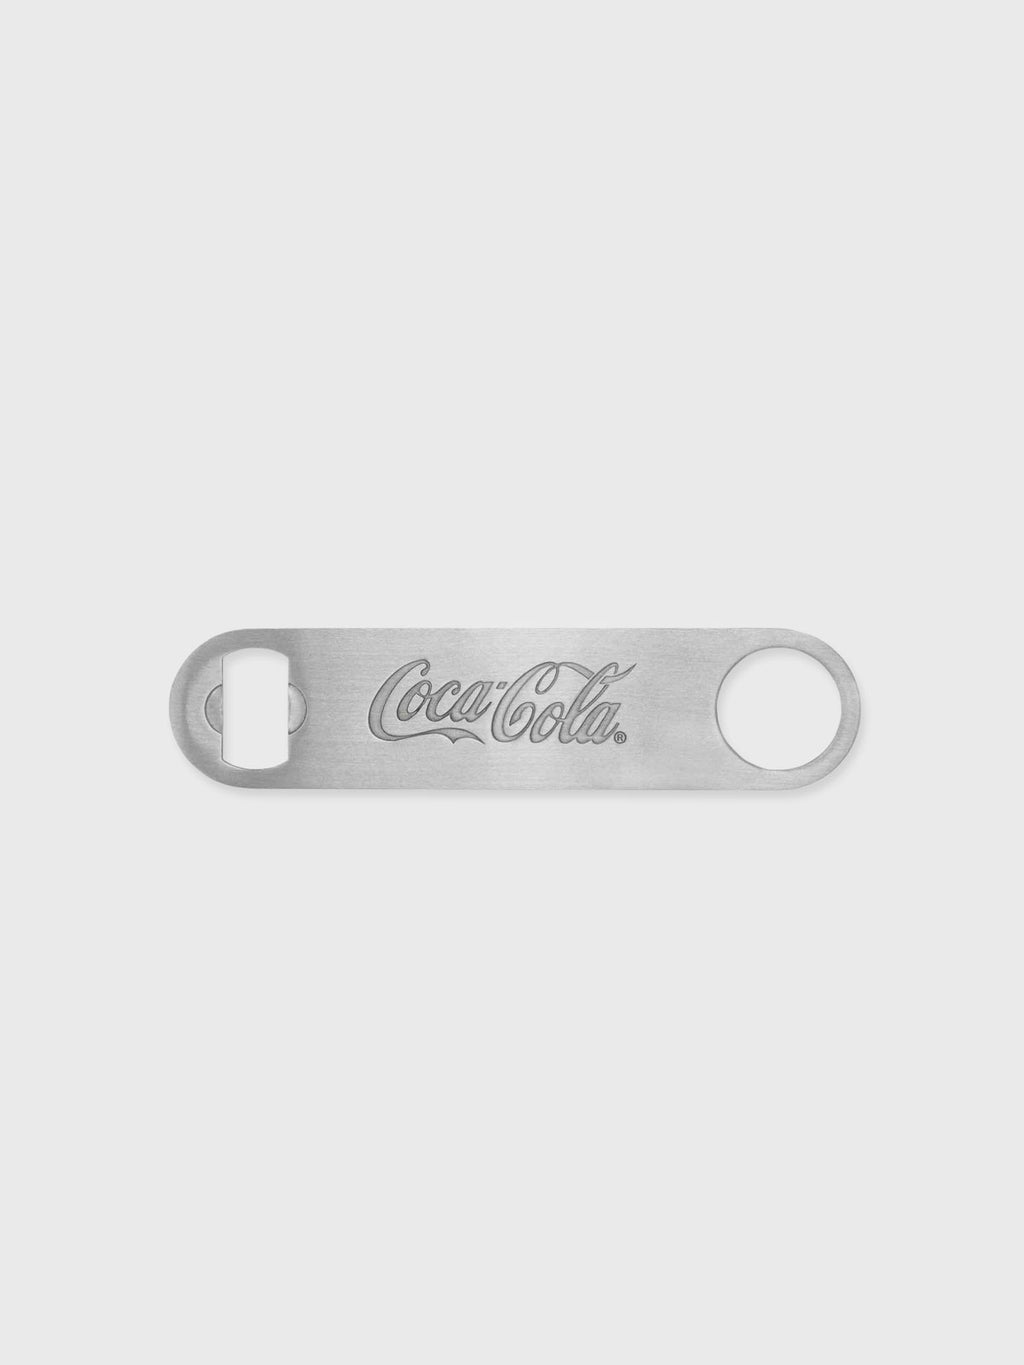 Coca-Cola® Flat Bottle Opener - Stainless Steel